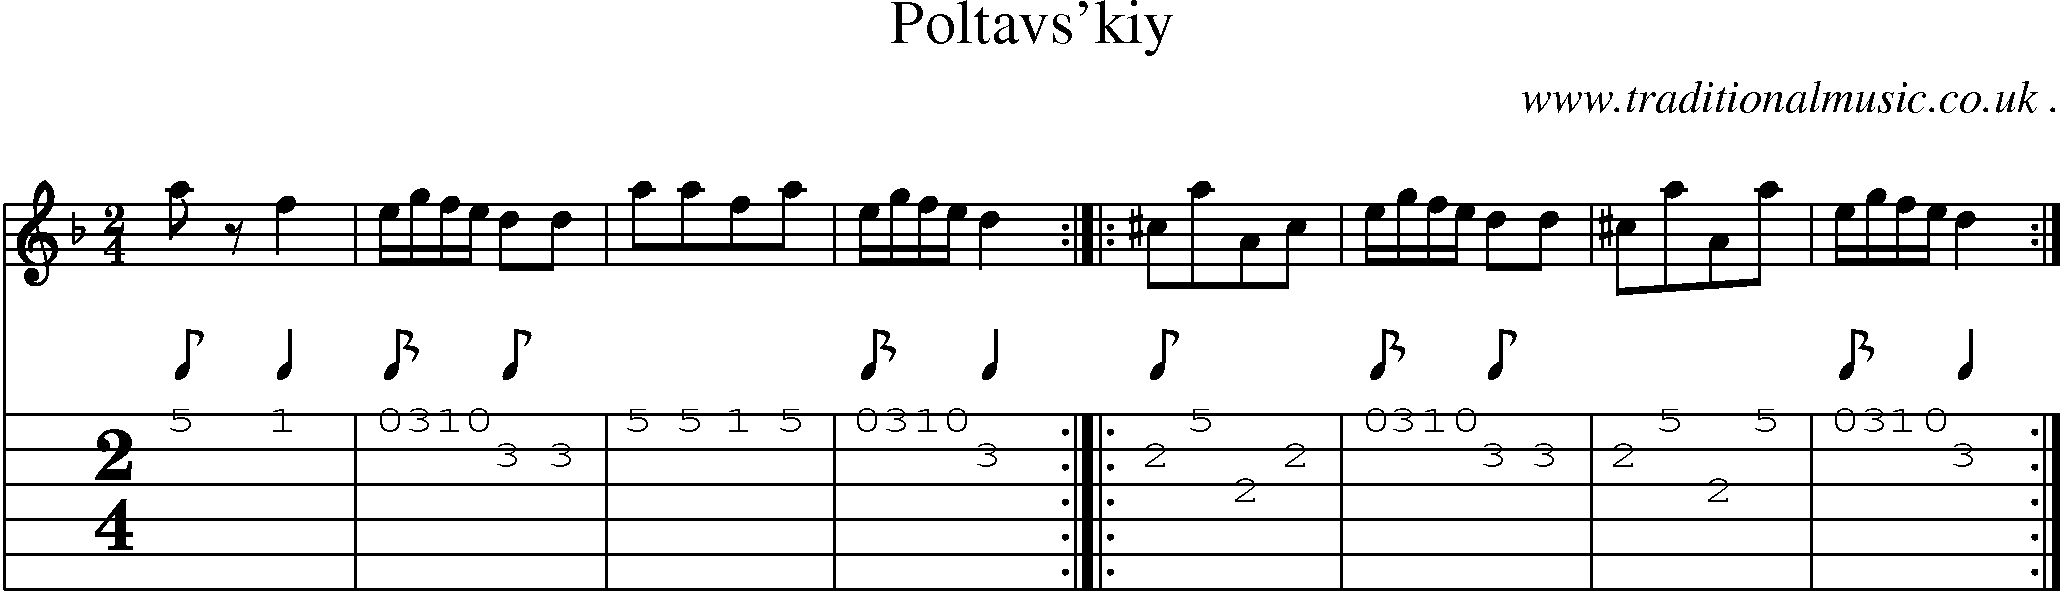 Sheet-Music and Guitar Tabs for Poltavskiy